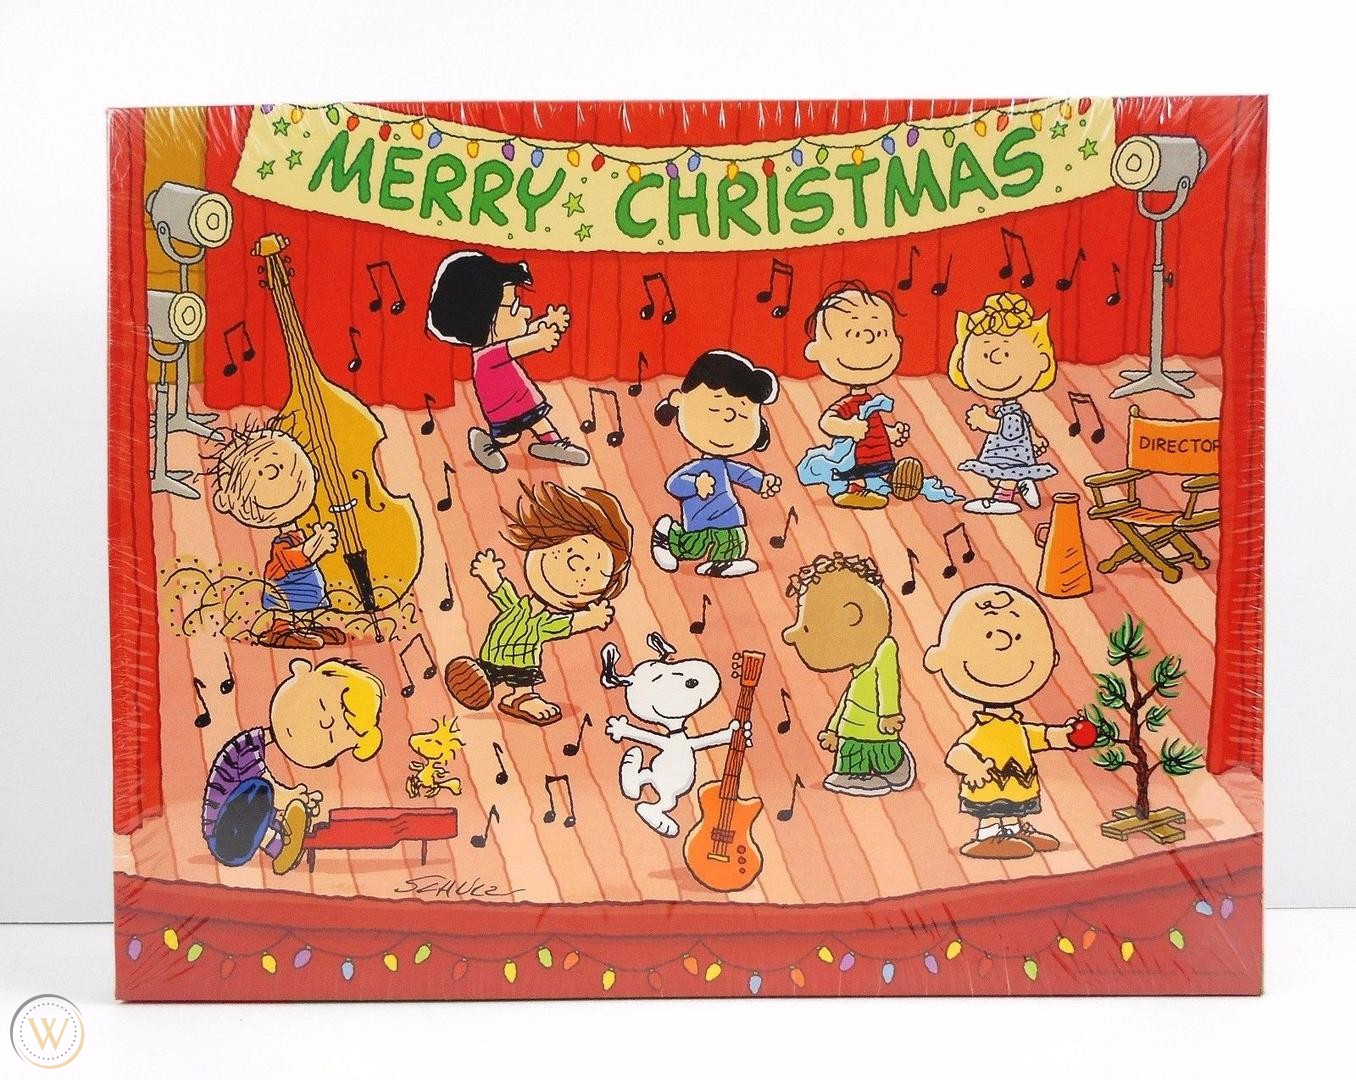 https://www.stgindy.org/wp-content/uploads/2021/12/Peanuts-Christmas.jpg